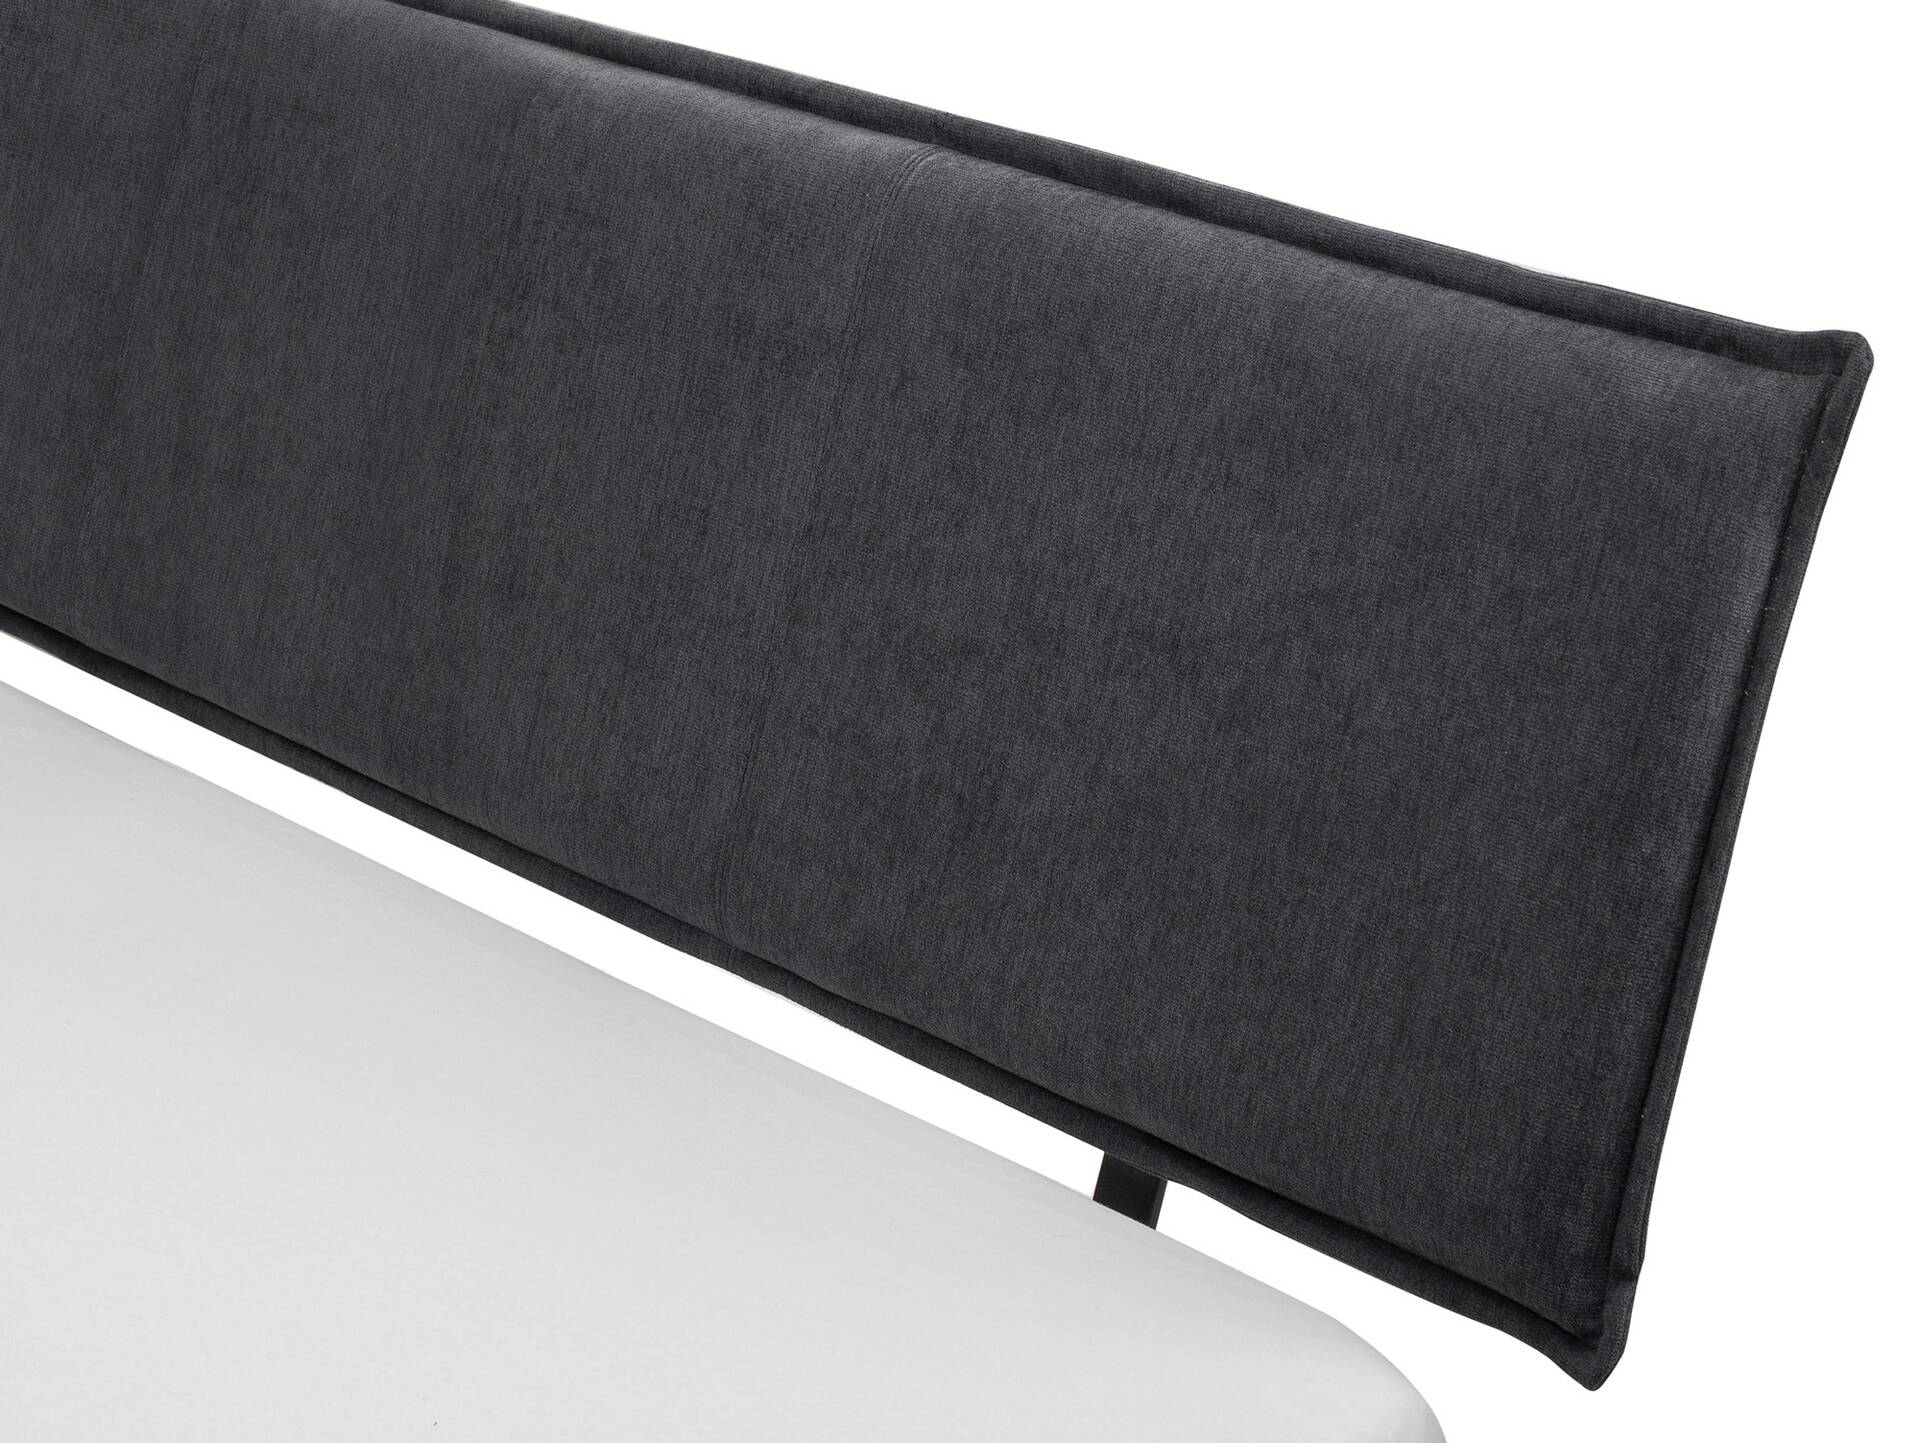 CALIDO 4-Fuß-Bett mit Polster-Kopfteil, Material Massivholz 120 x 220 cm | Buche geölt | Stoff Anthrazit | Standardhöhe